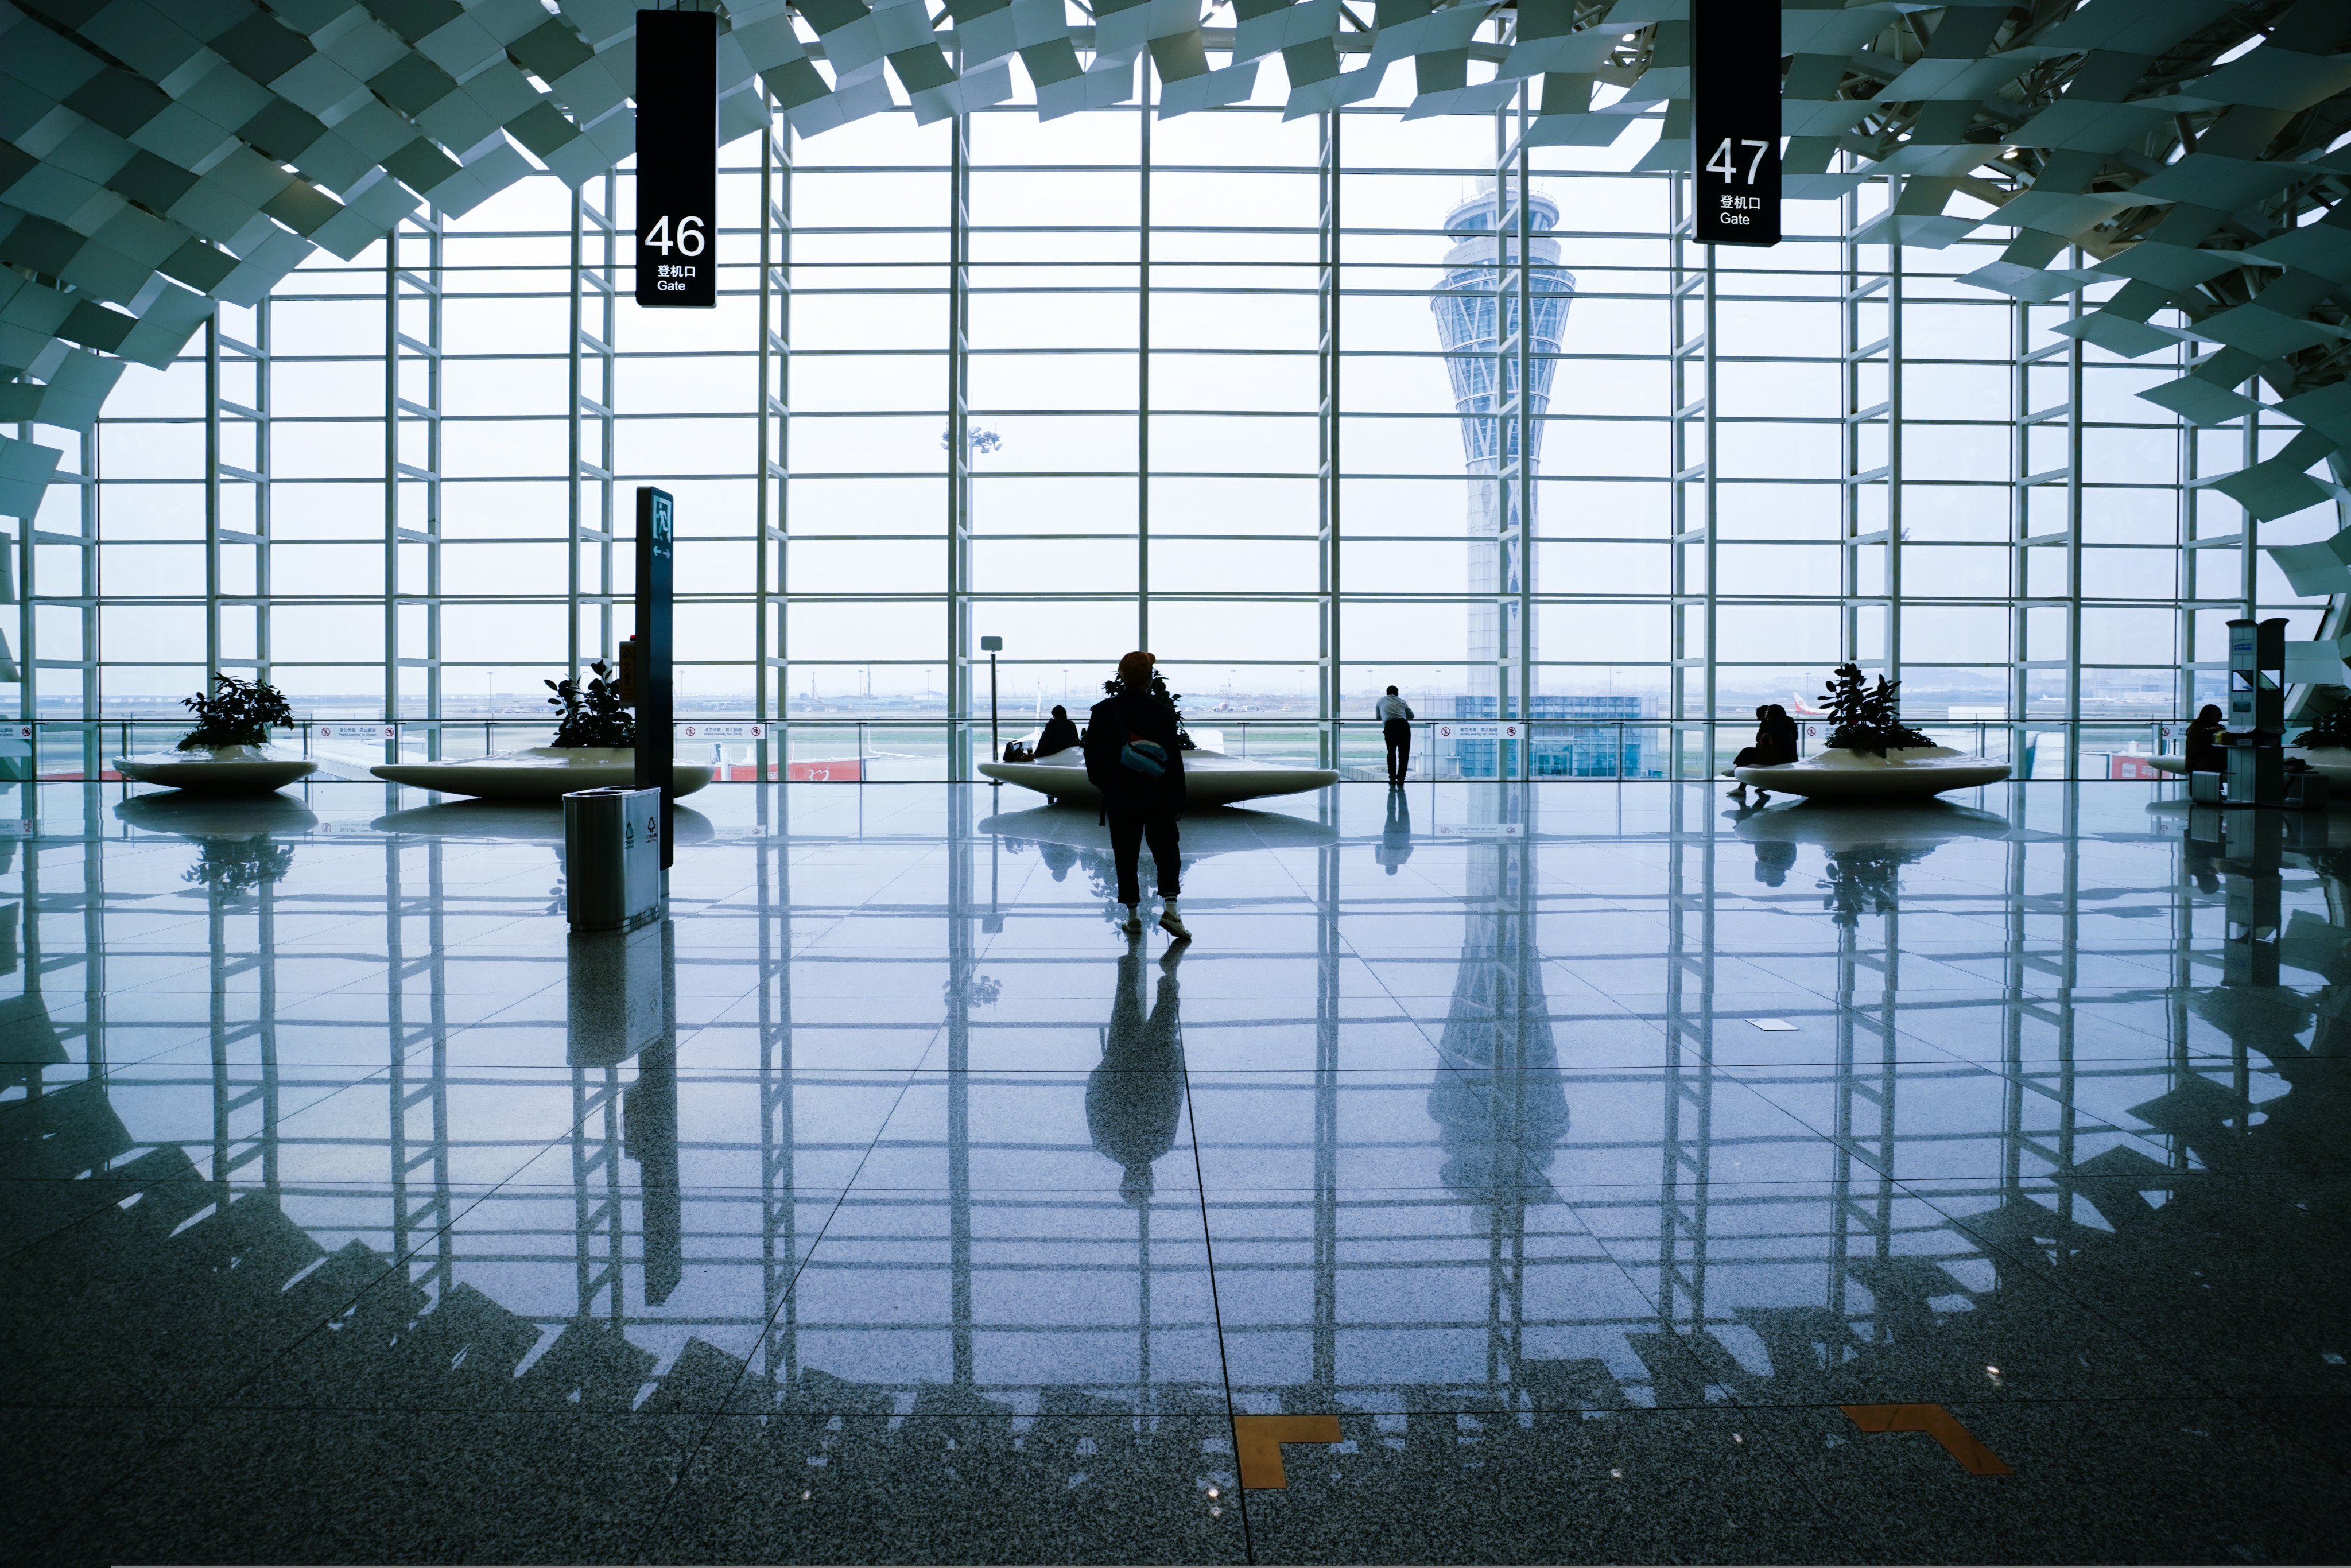 Shenzhen Bao’an International Airport has been named the world’s most beautiful airport, by the World Air Stewardess Association. Photo: Shutterstock